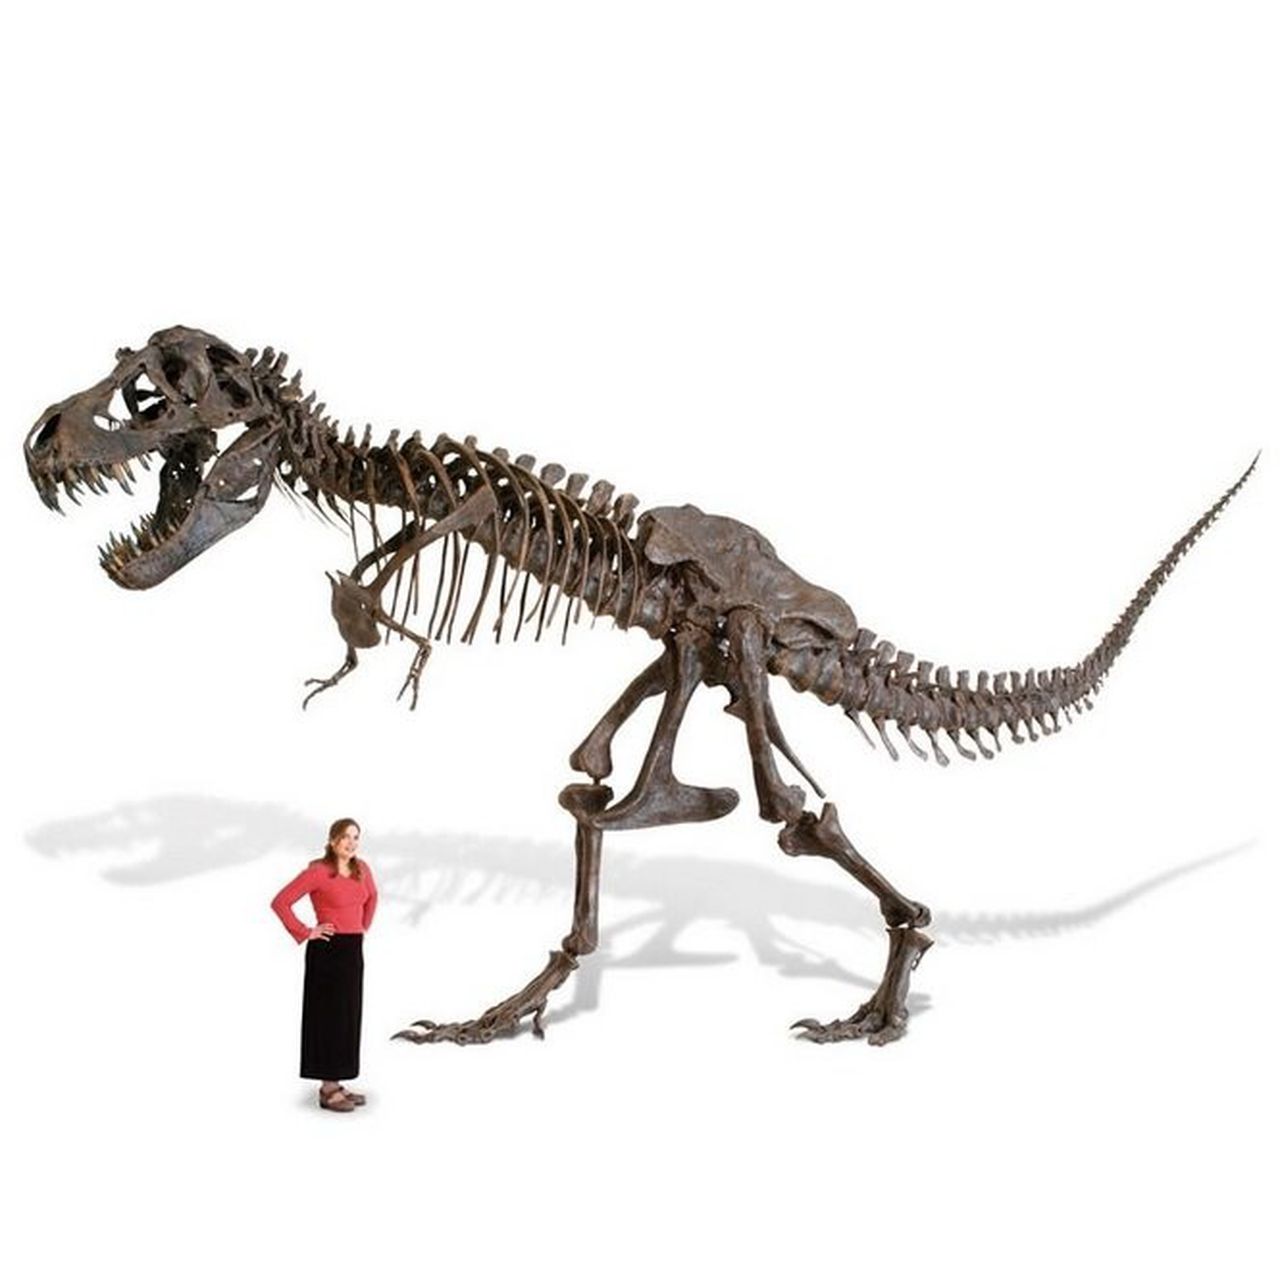 A Life-Size T-Rex Skeleton